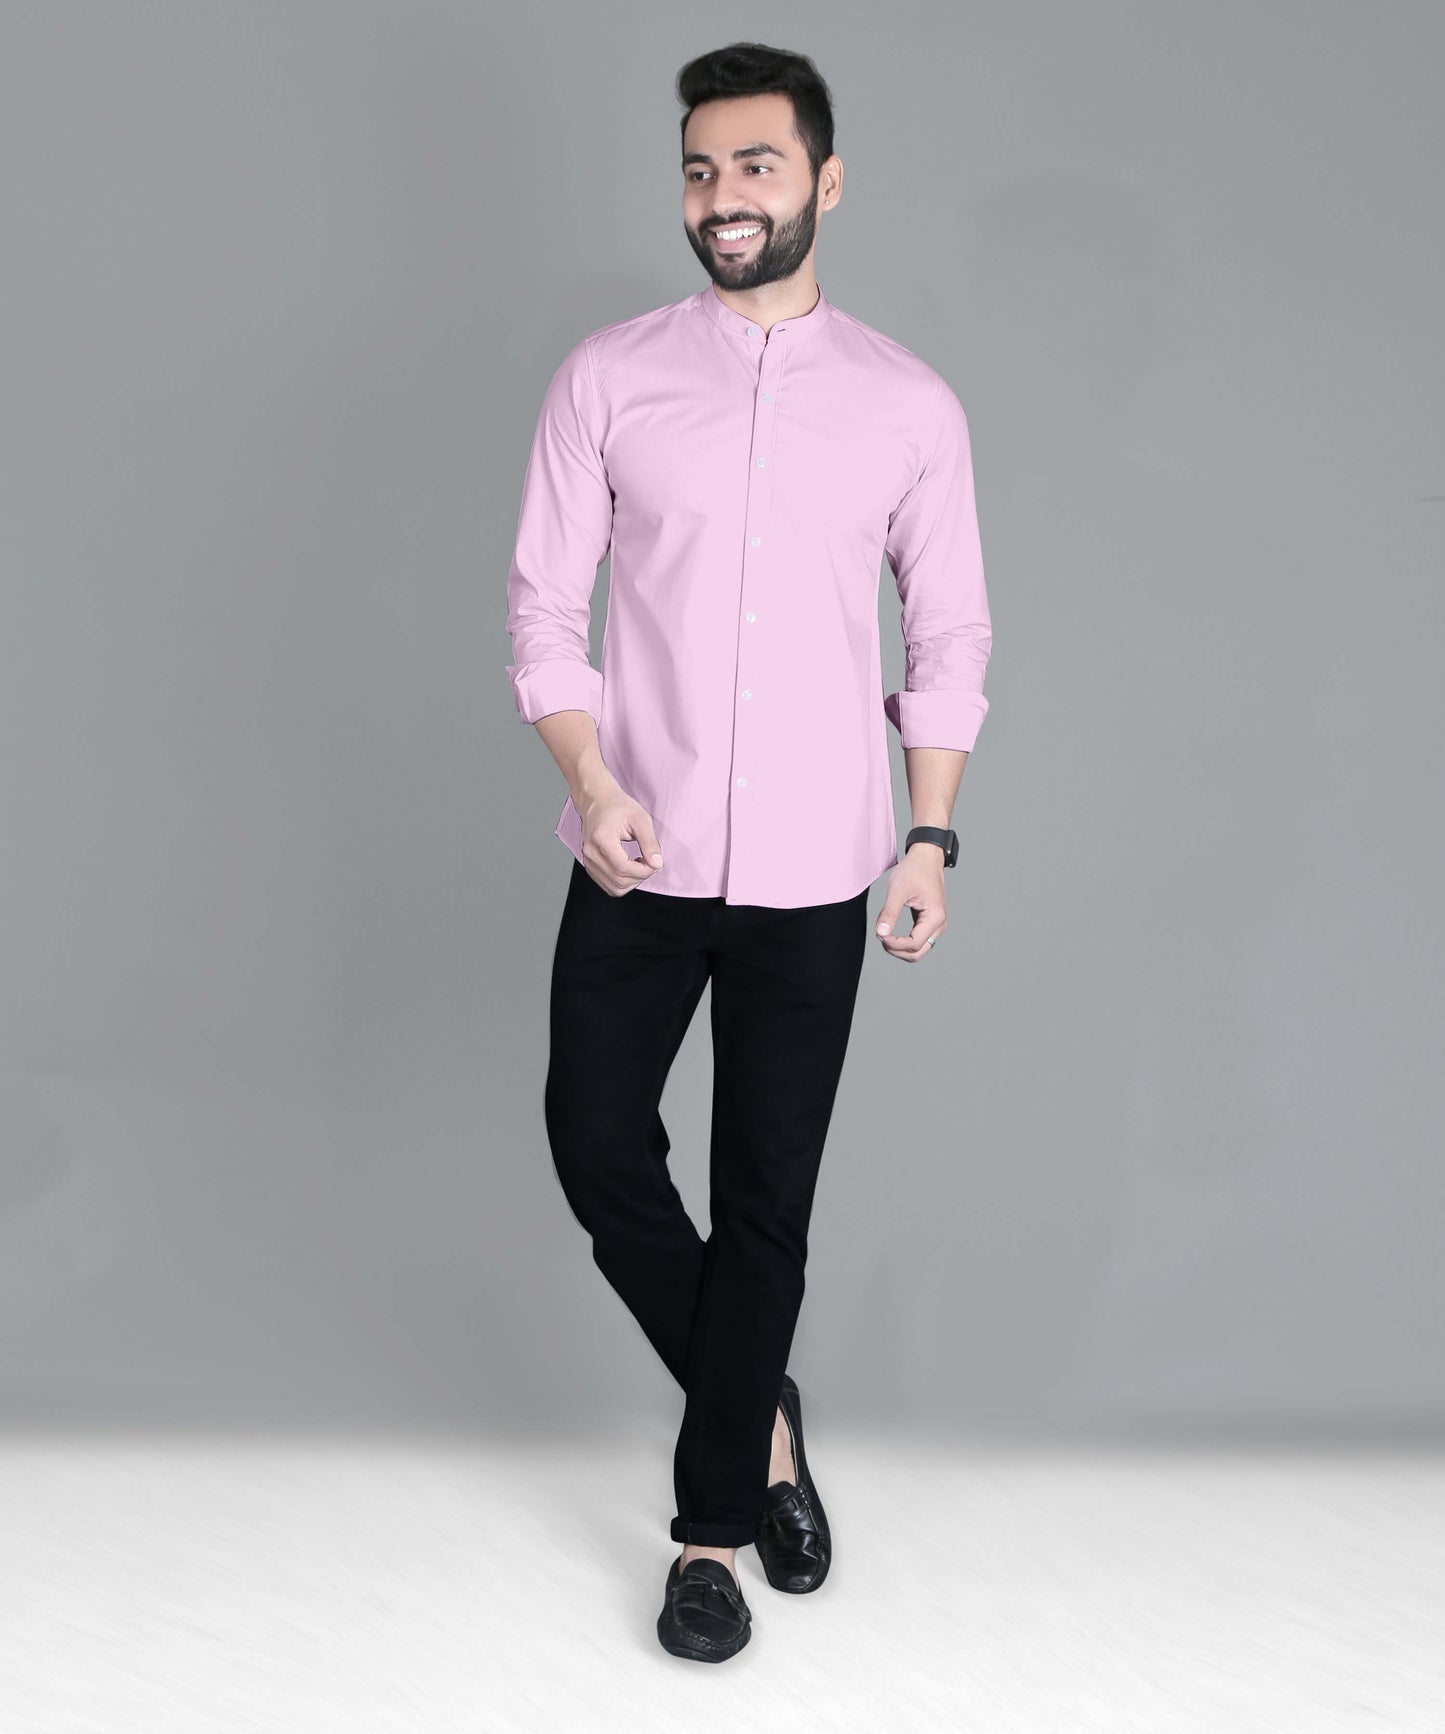 5thanfold Men's Casual Pink Full Sleeve Pure Cotton Mandarin Collar Shirt (No Pocket)